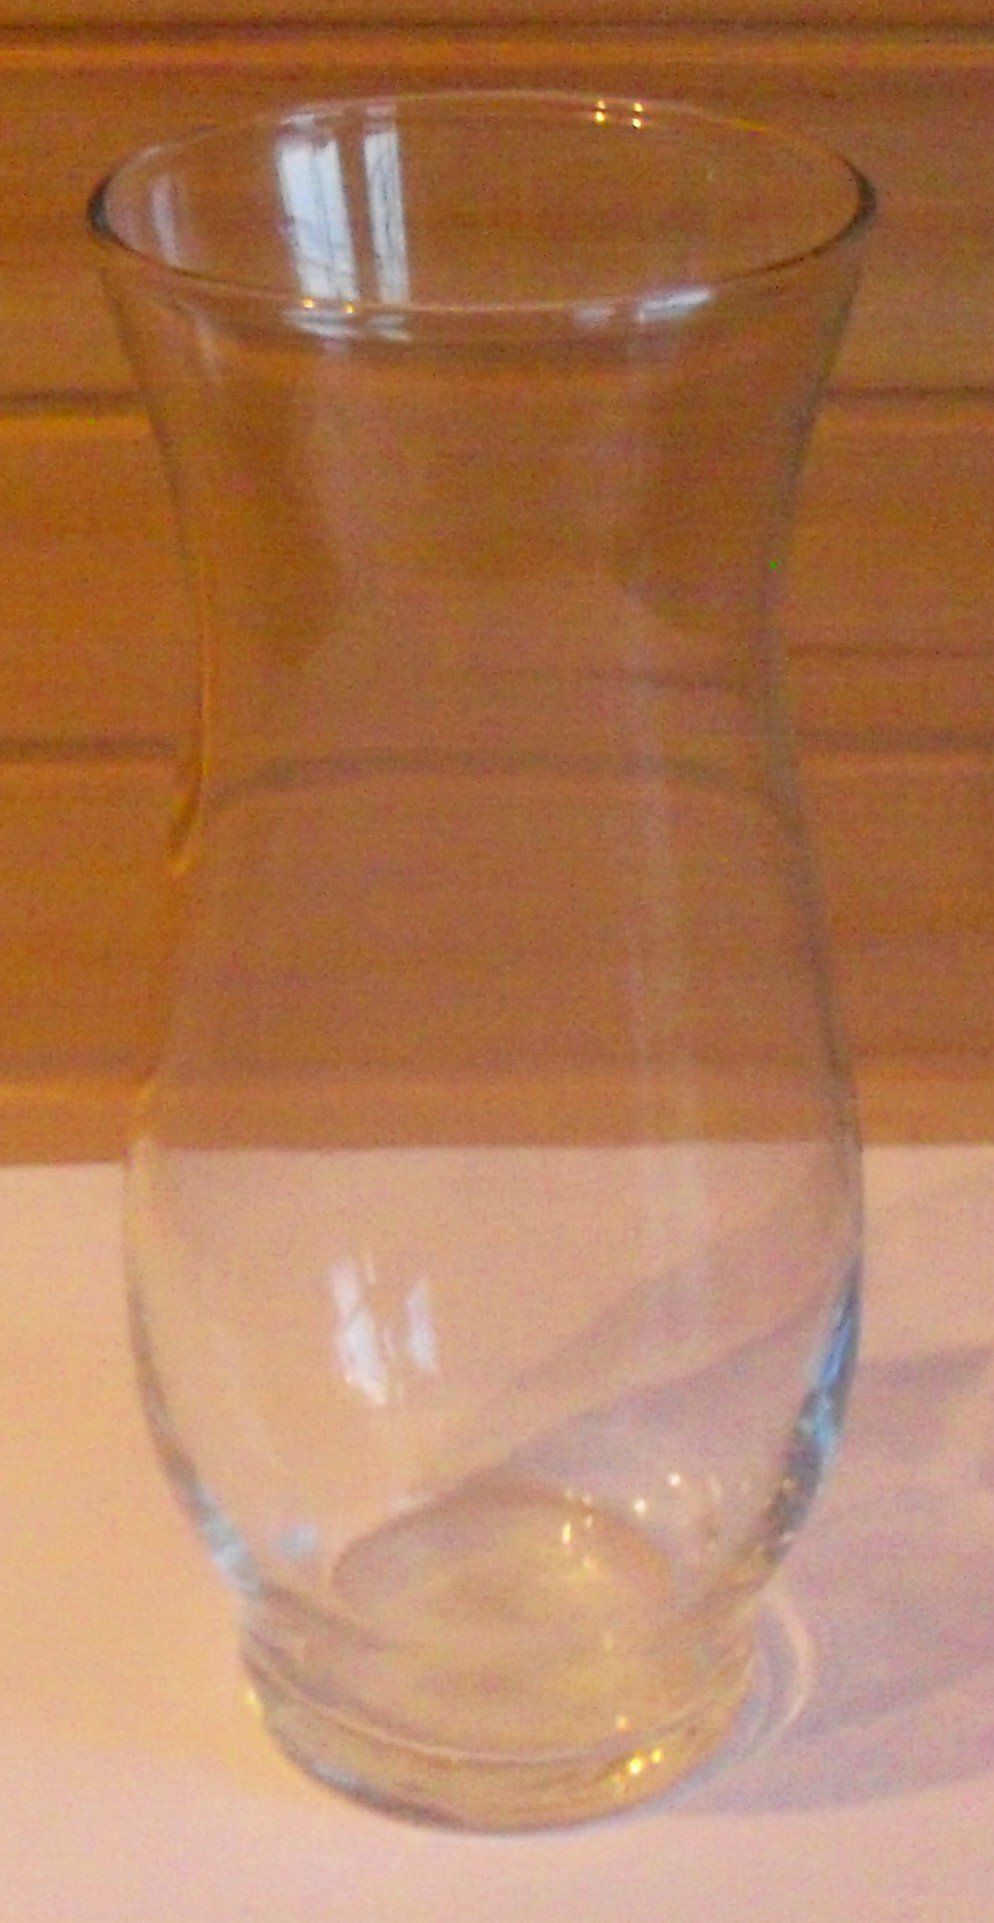 Heirloom Hourglass unity sand ceremony accessory Hourglass Style Glass Sand Pourer